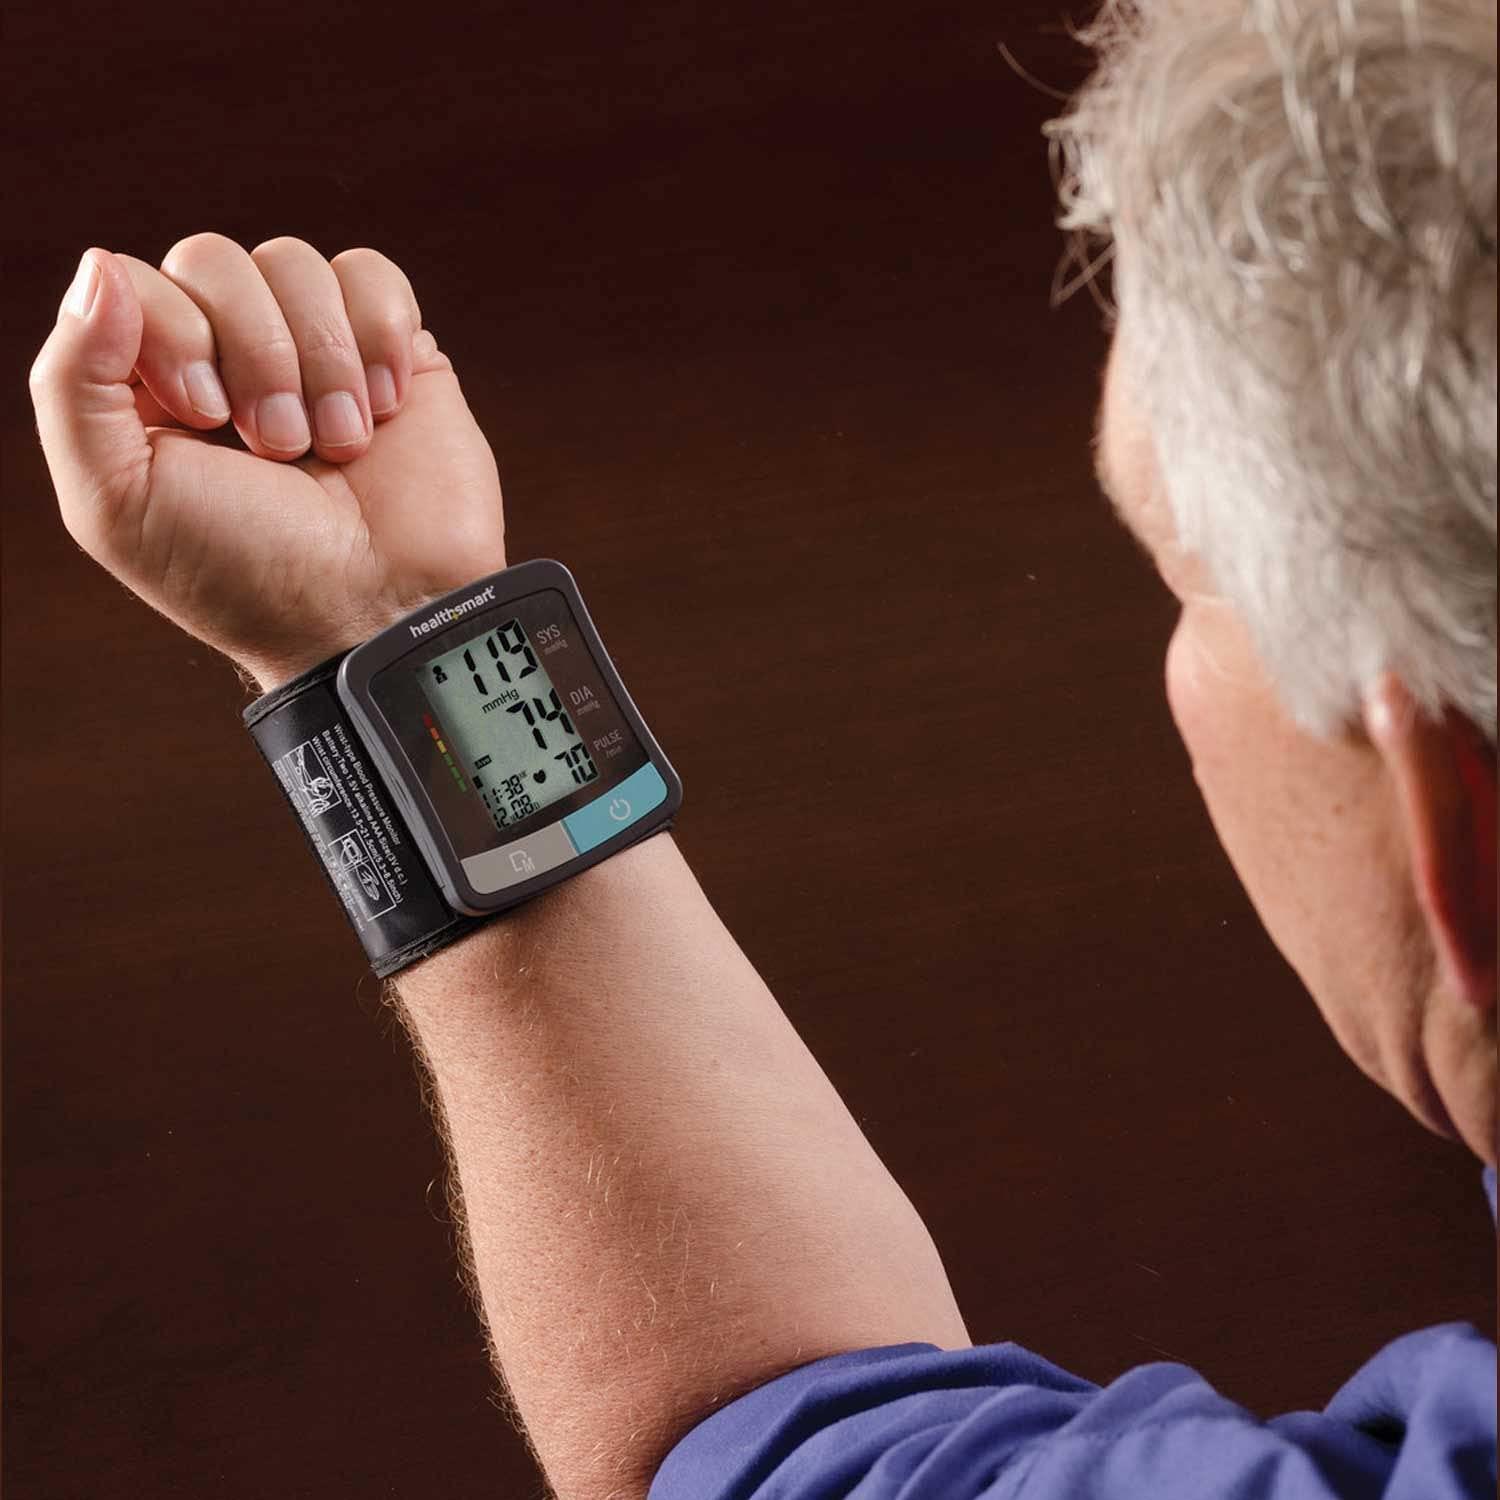 HealthSmart Digital Standard Wrist Blood Pressure Monitor with